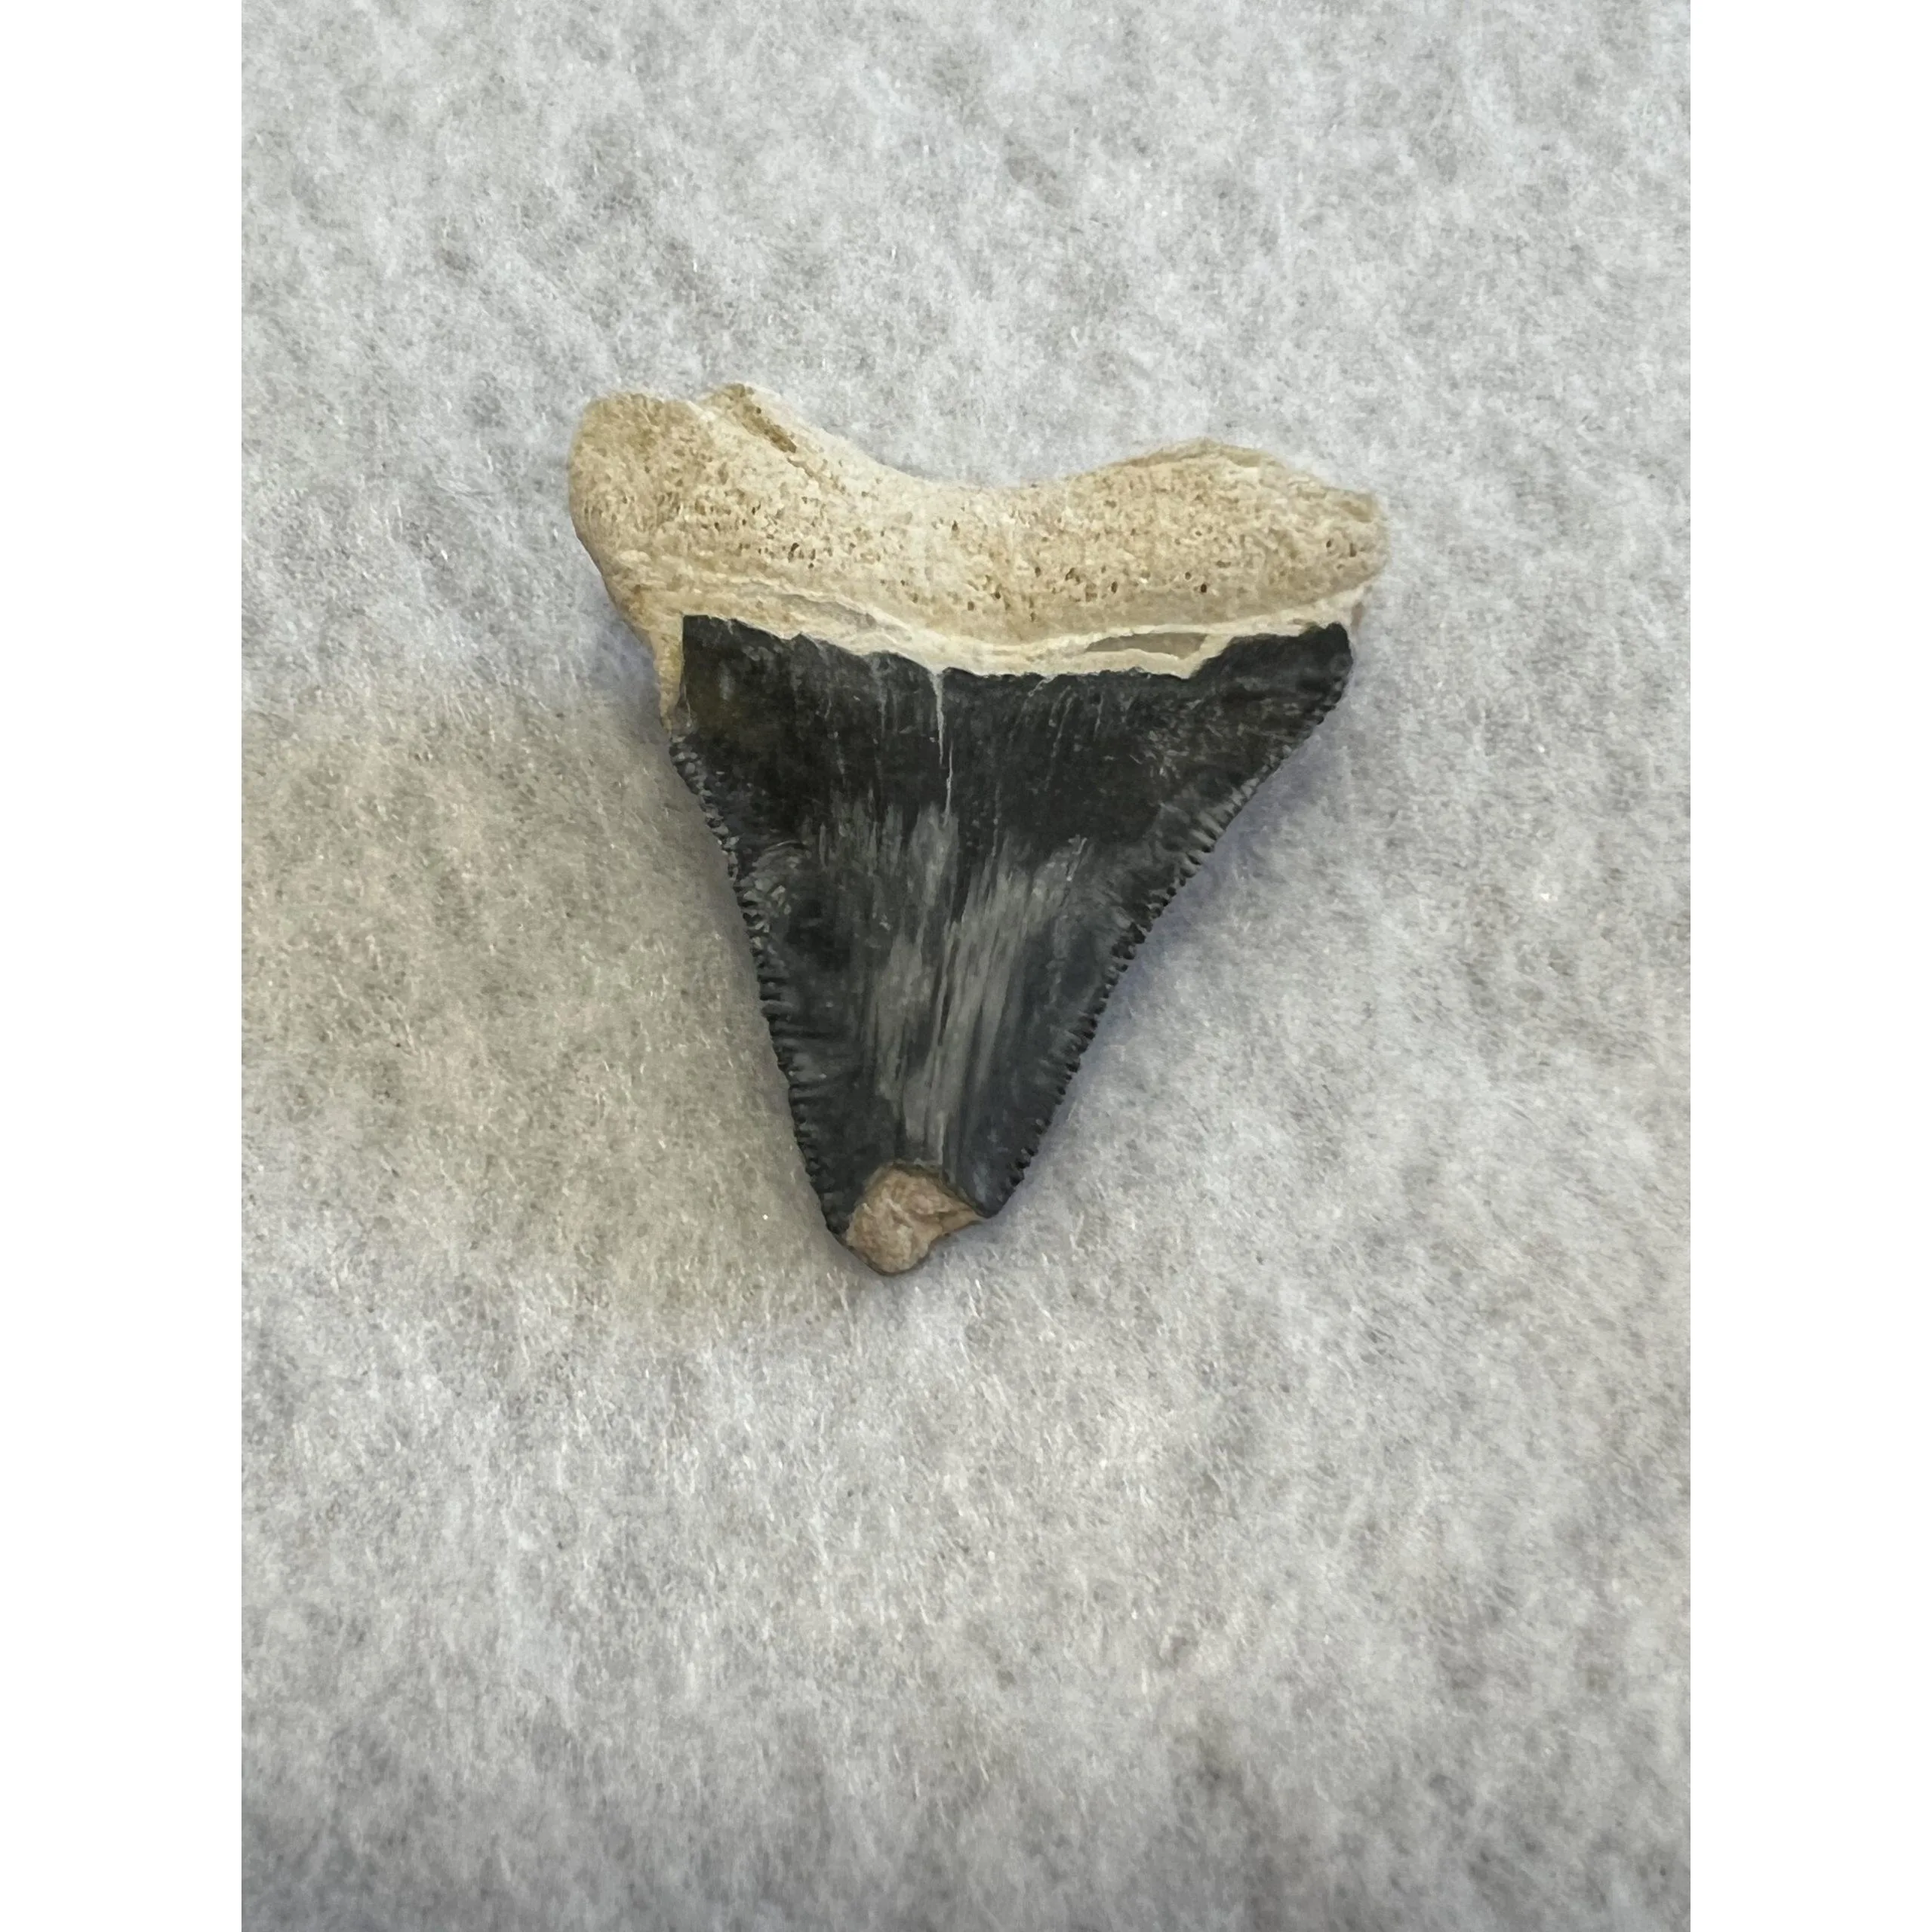 Megalodon Tooth  Bone Valley, Florida 1.51 inch Prehistoric Online